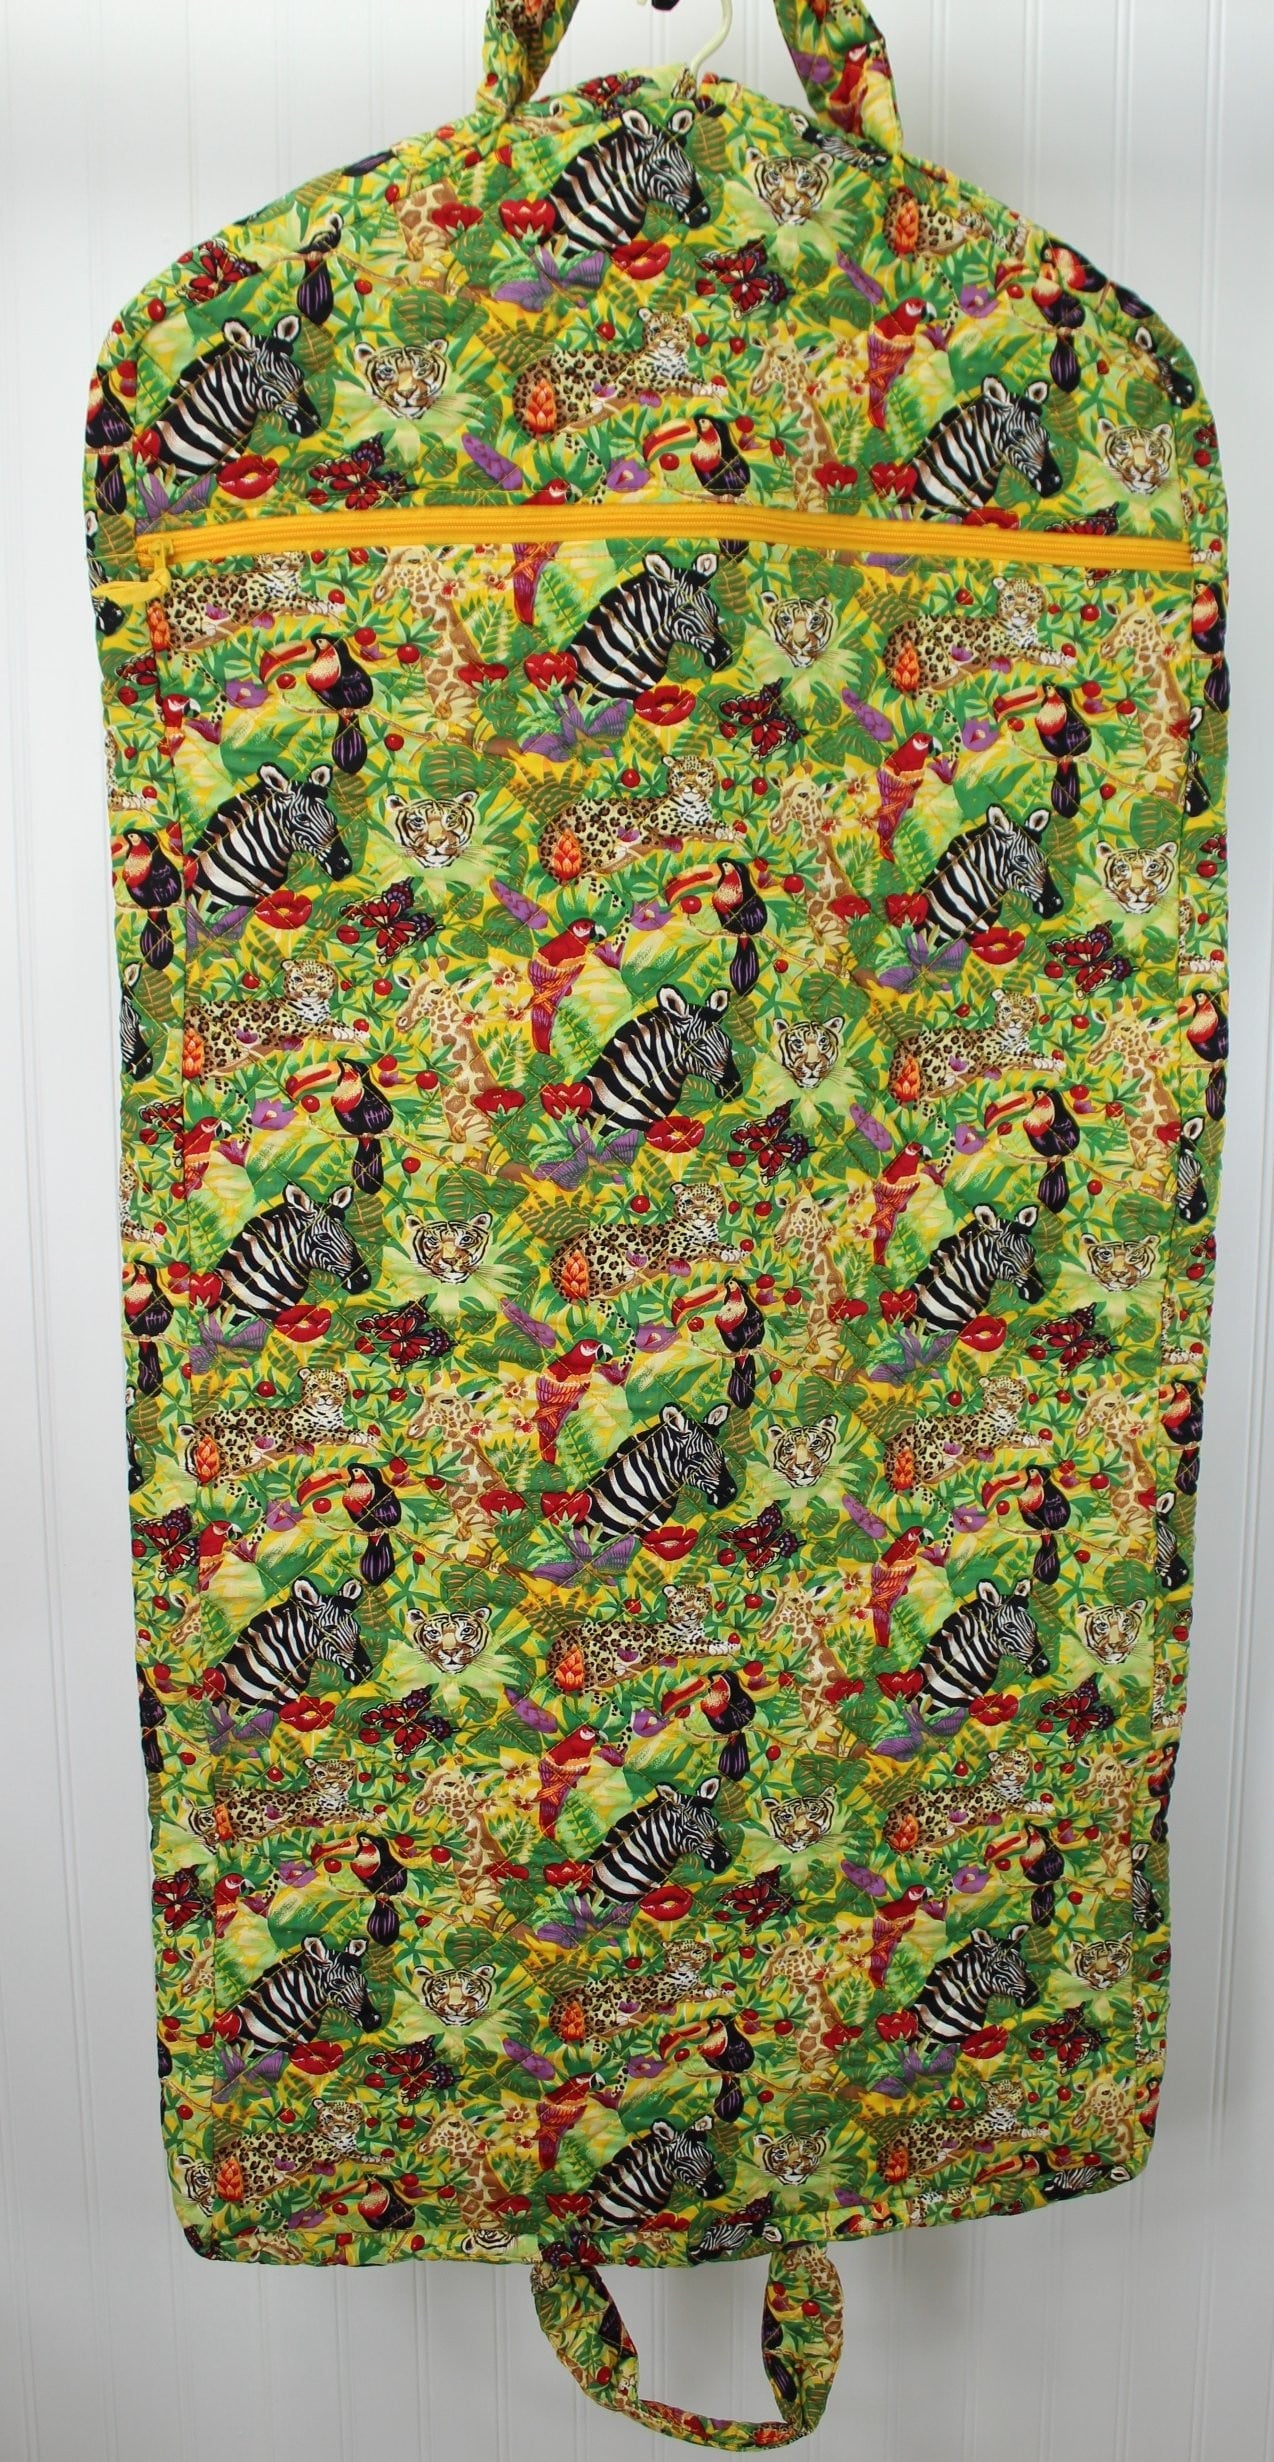 Unbranded Jungle Scene Fabric Garment Carrier Hanging Overnighter - Zebra Toucan interior pocket